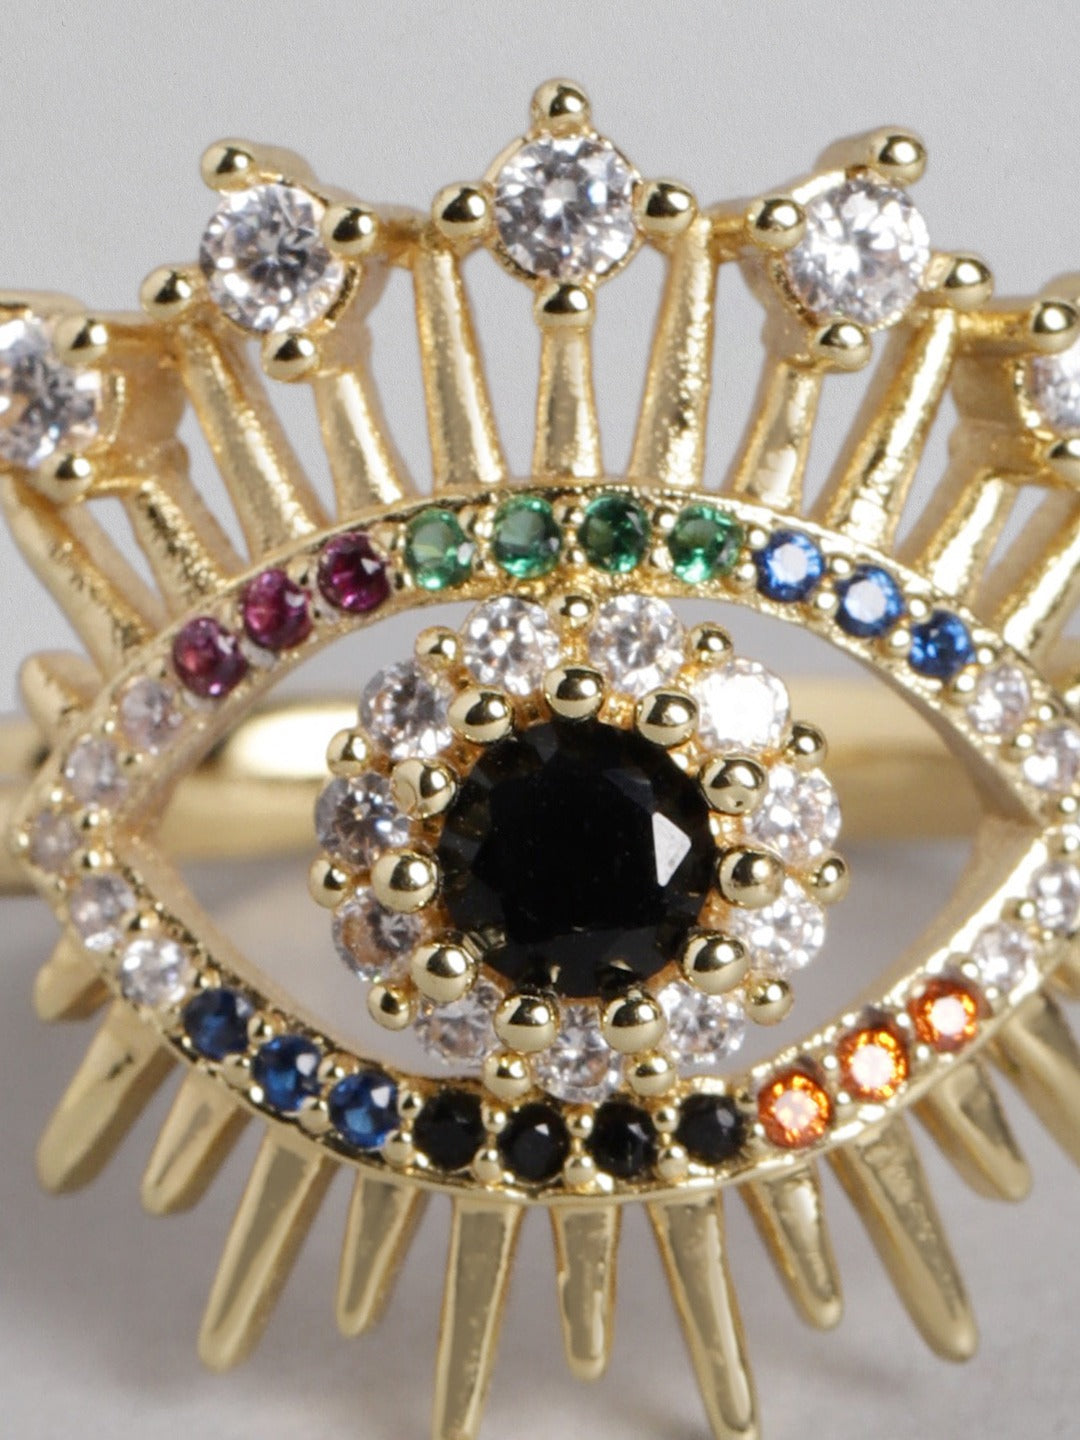 Blueberry gold plated Evil Eye ring